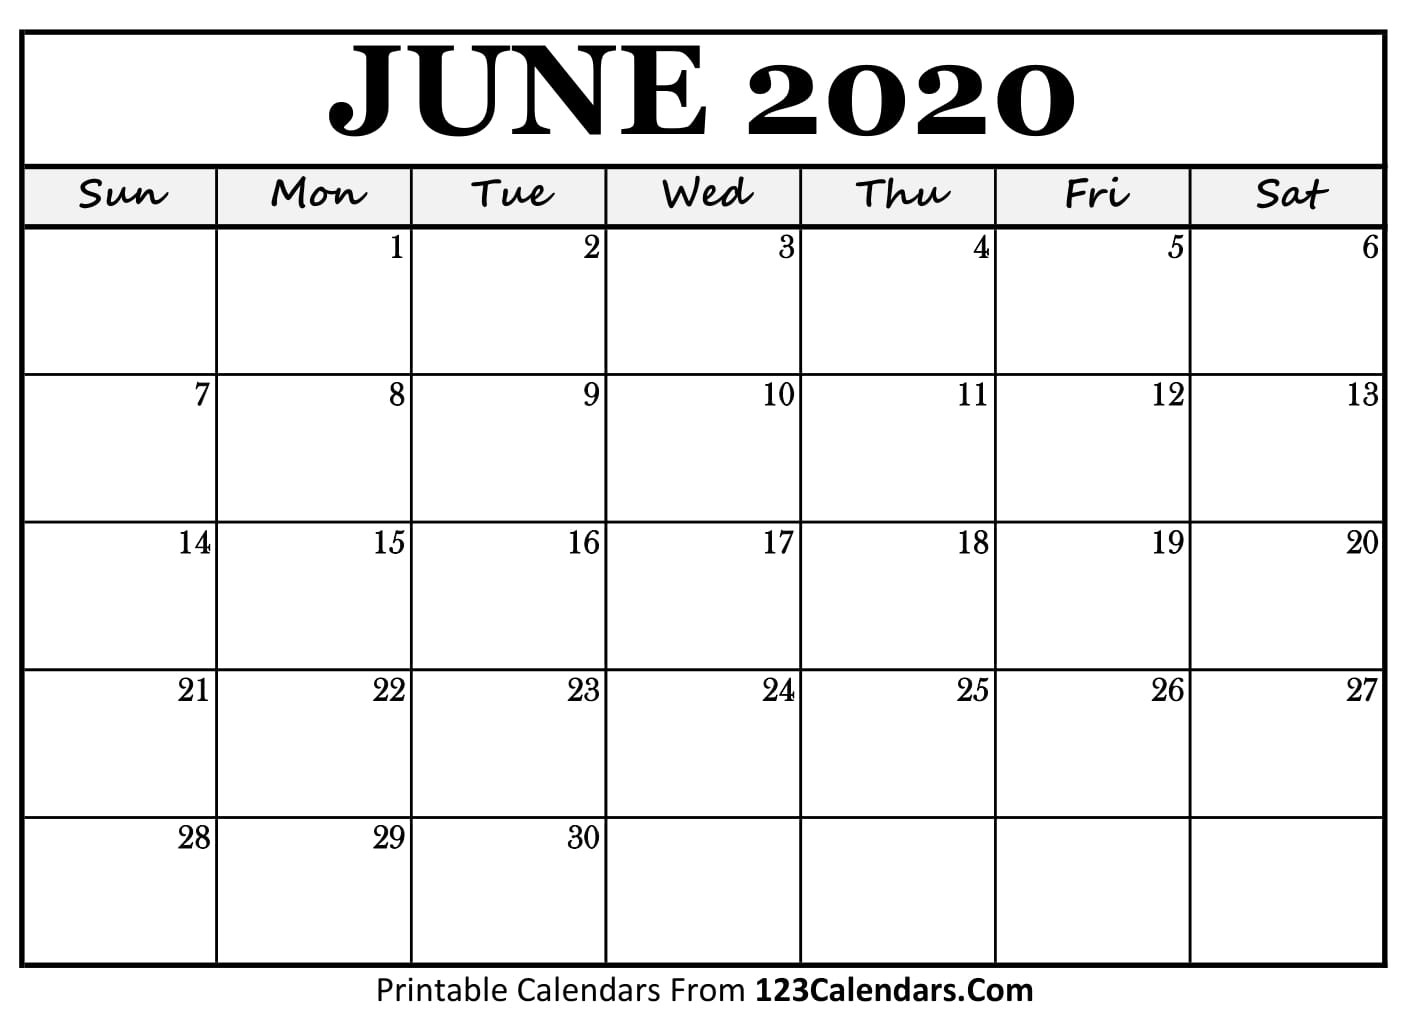 June 2020 Printable Calendar | 123Calendars  2020 Calendar Template With Catholic Holidays